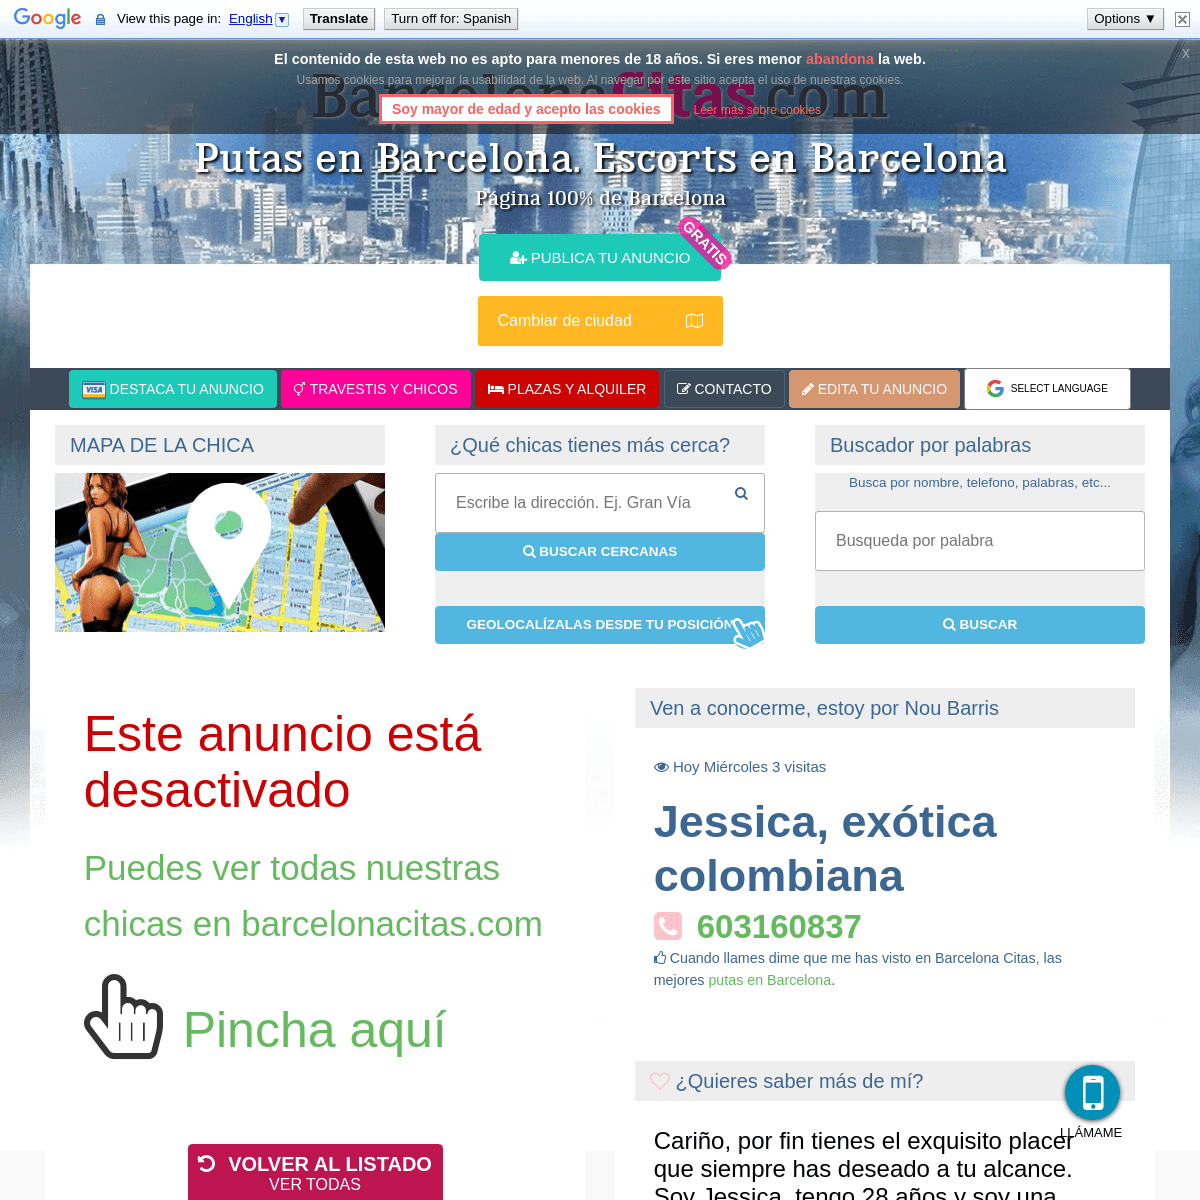 A complete backup of https://www.barcelonacitas.com/putas-barcelona-69113-jessica-exotica-colombiana-603160837